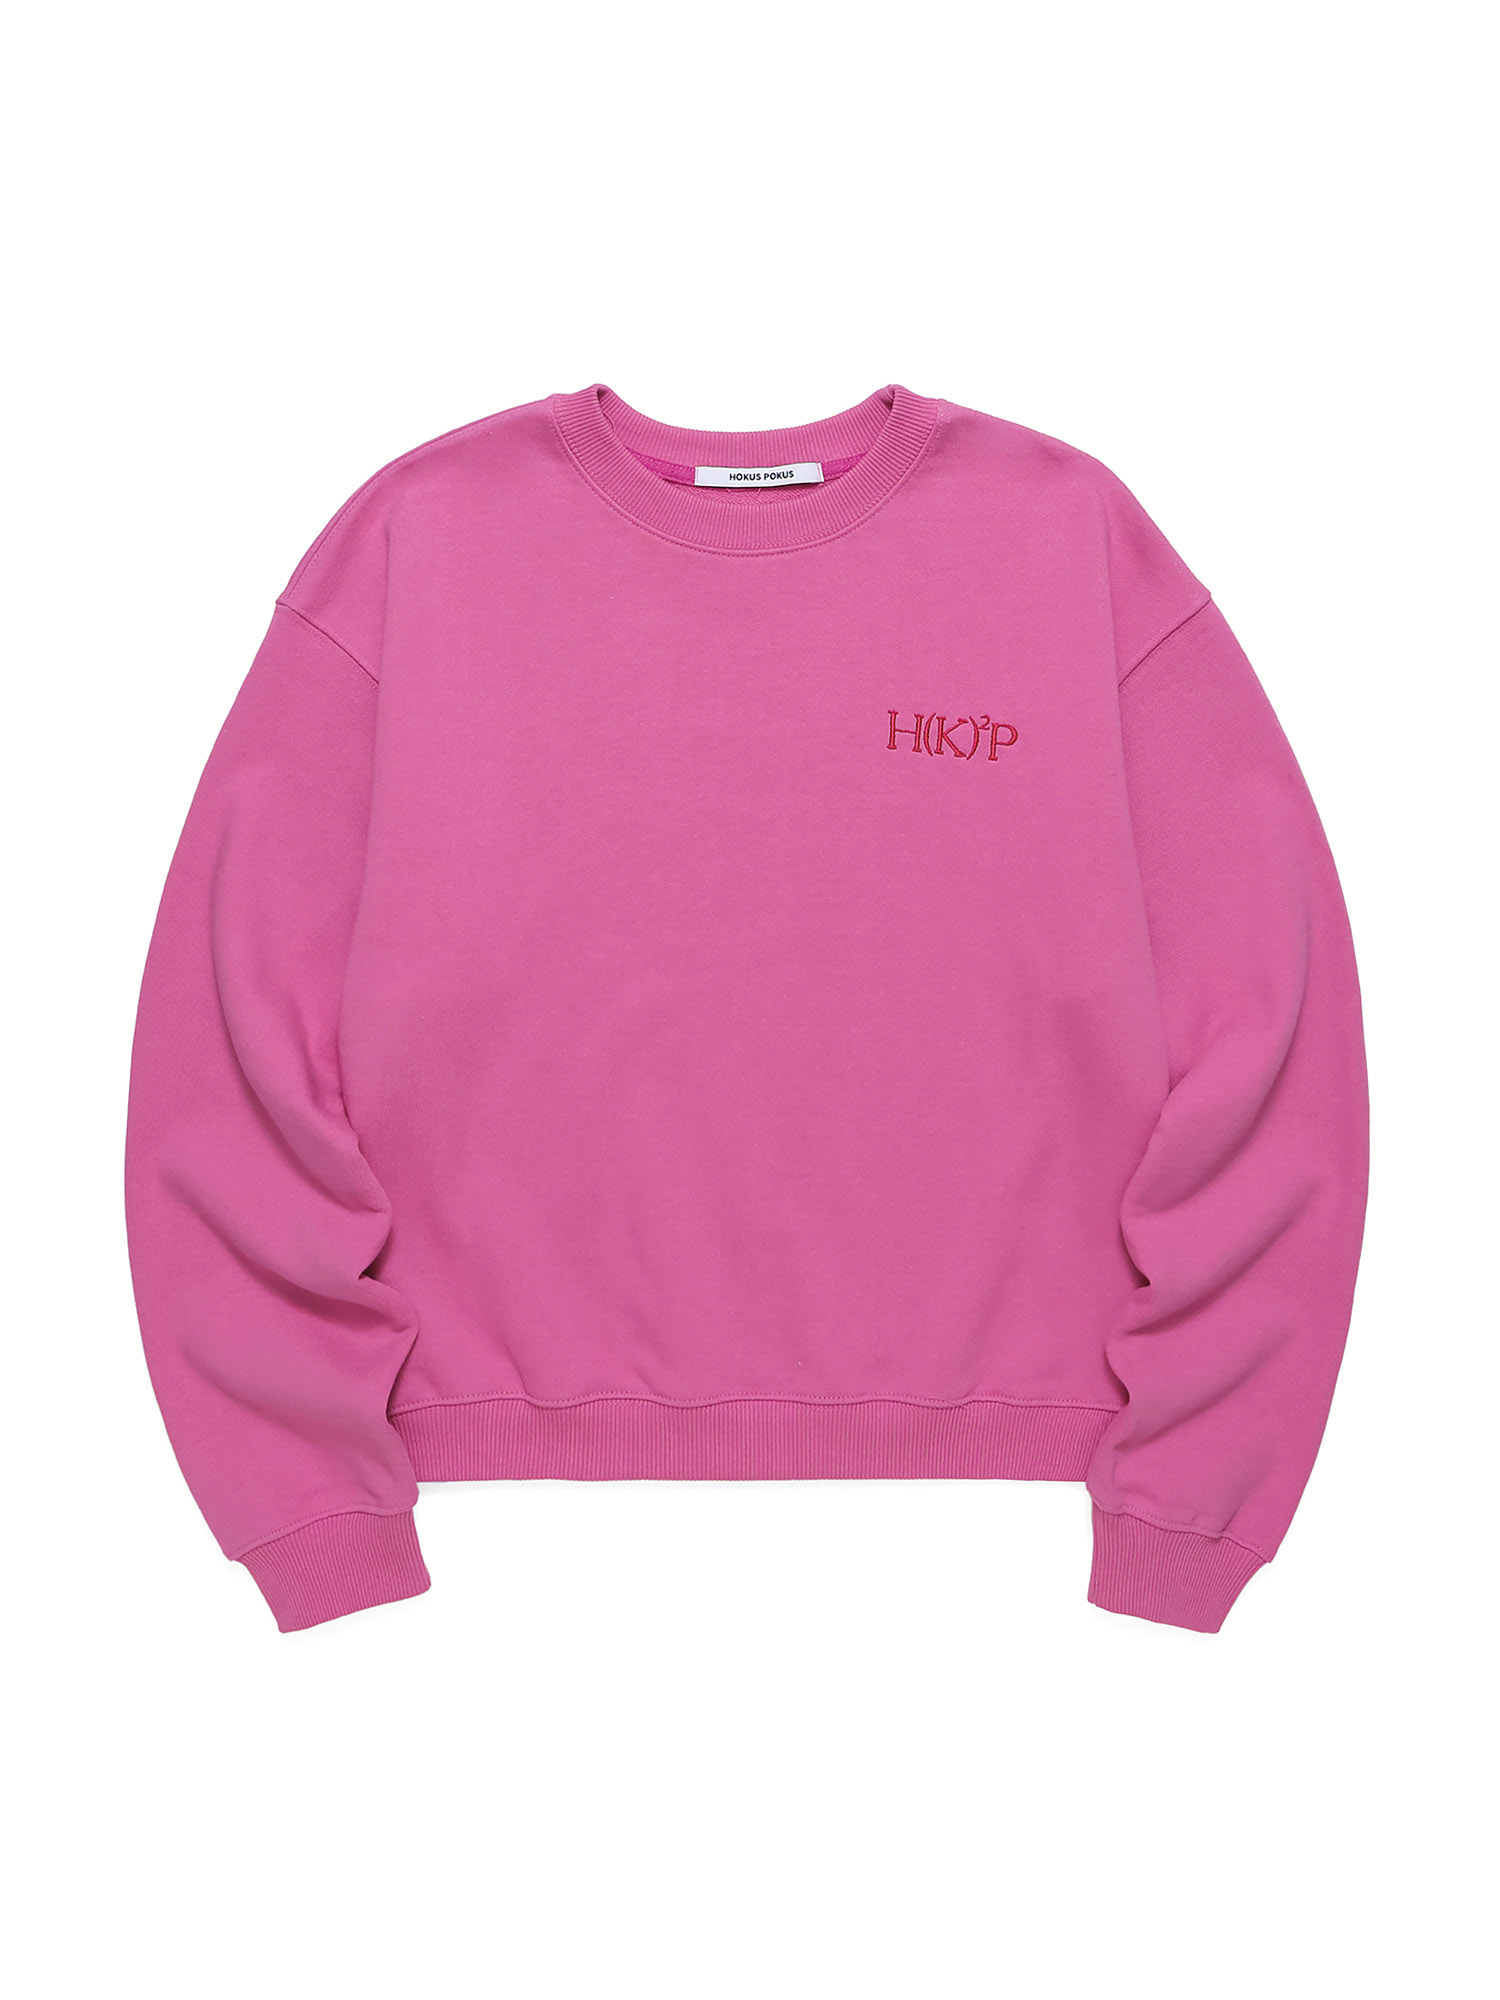 HK2P Sweatshirt - Pink